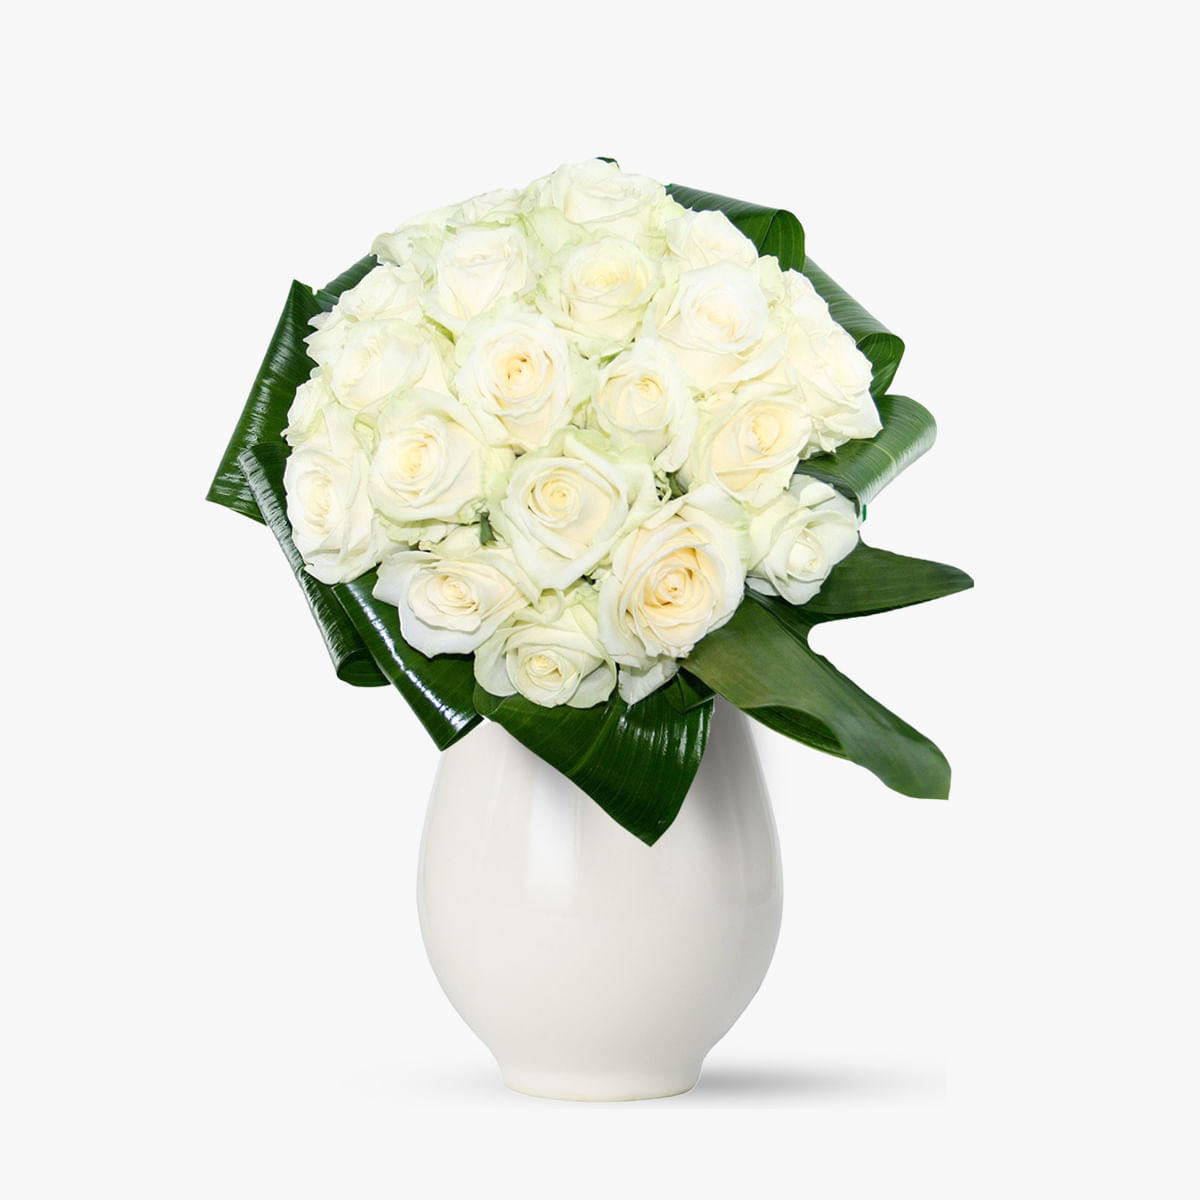 Buchet de 25 trandafiri albi – Standard albi